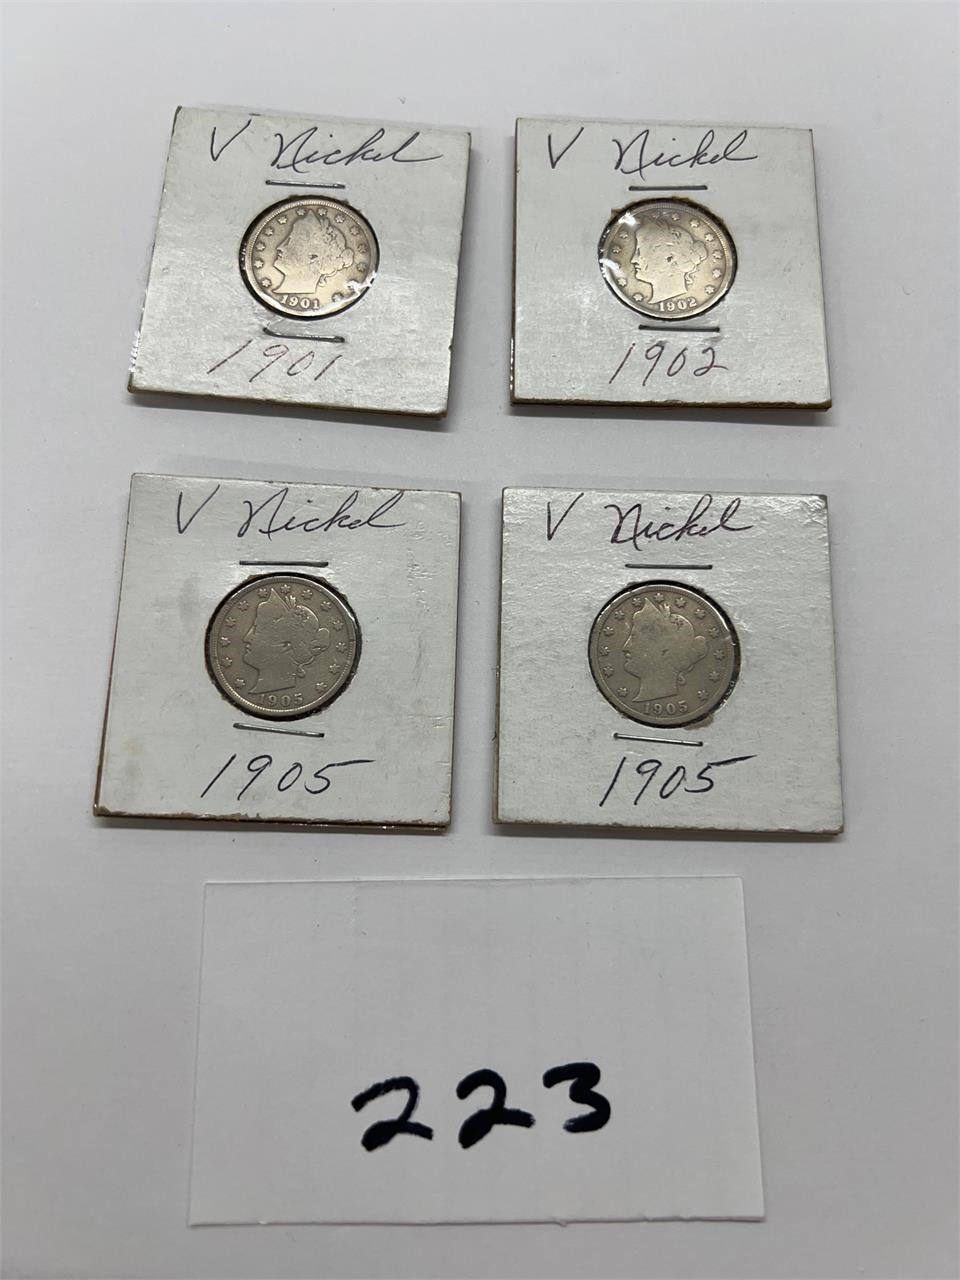 Lot of 4 V nickels - silver - 1901 1902 1905